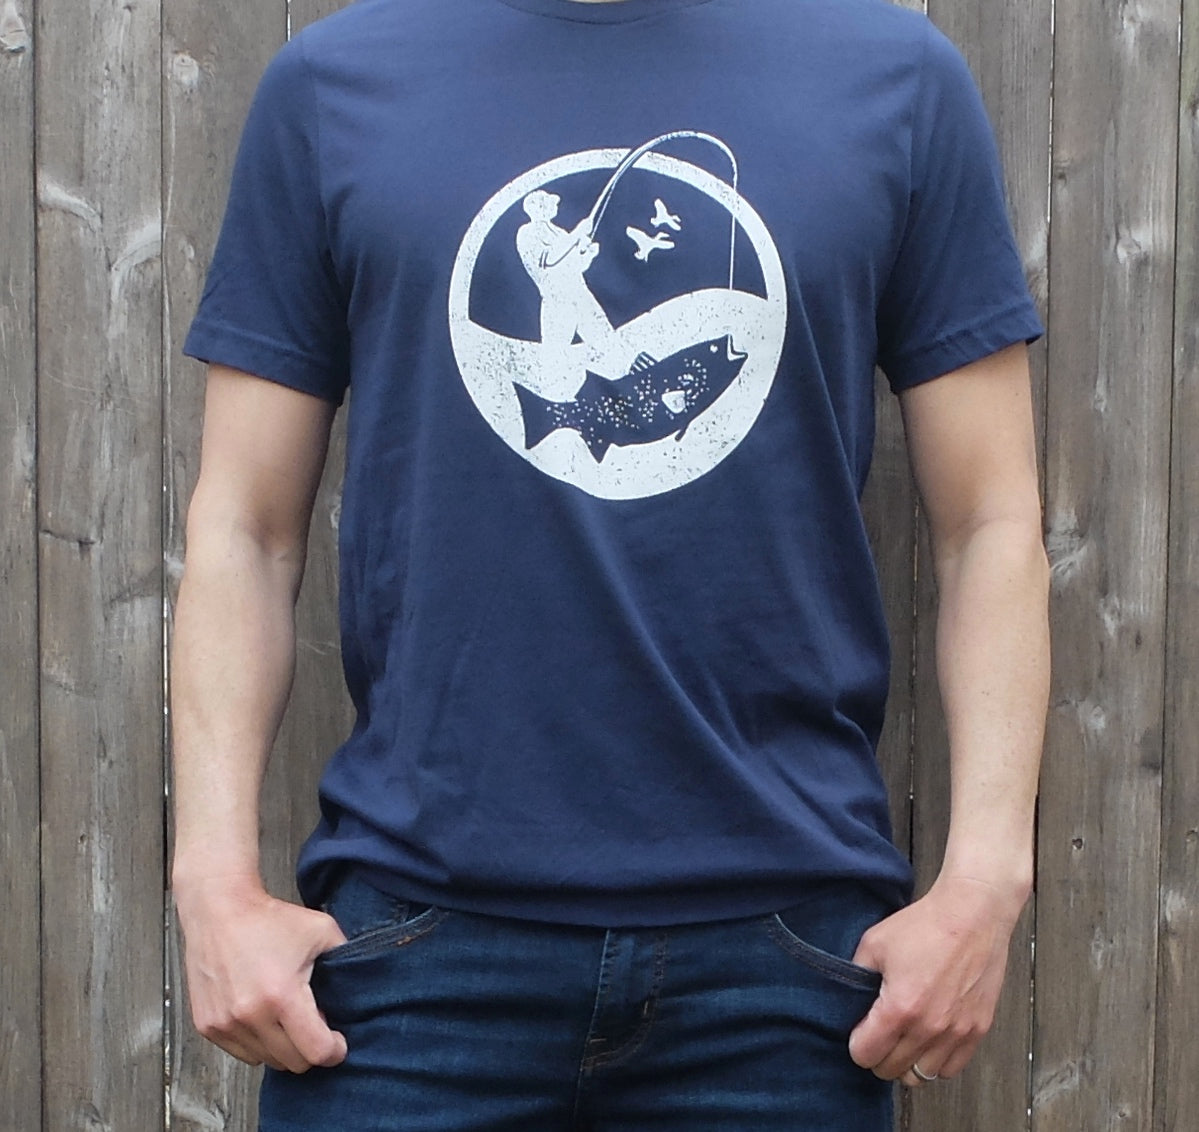 man wearing navy blue cotton t-shirt with round white surf fisherman logo